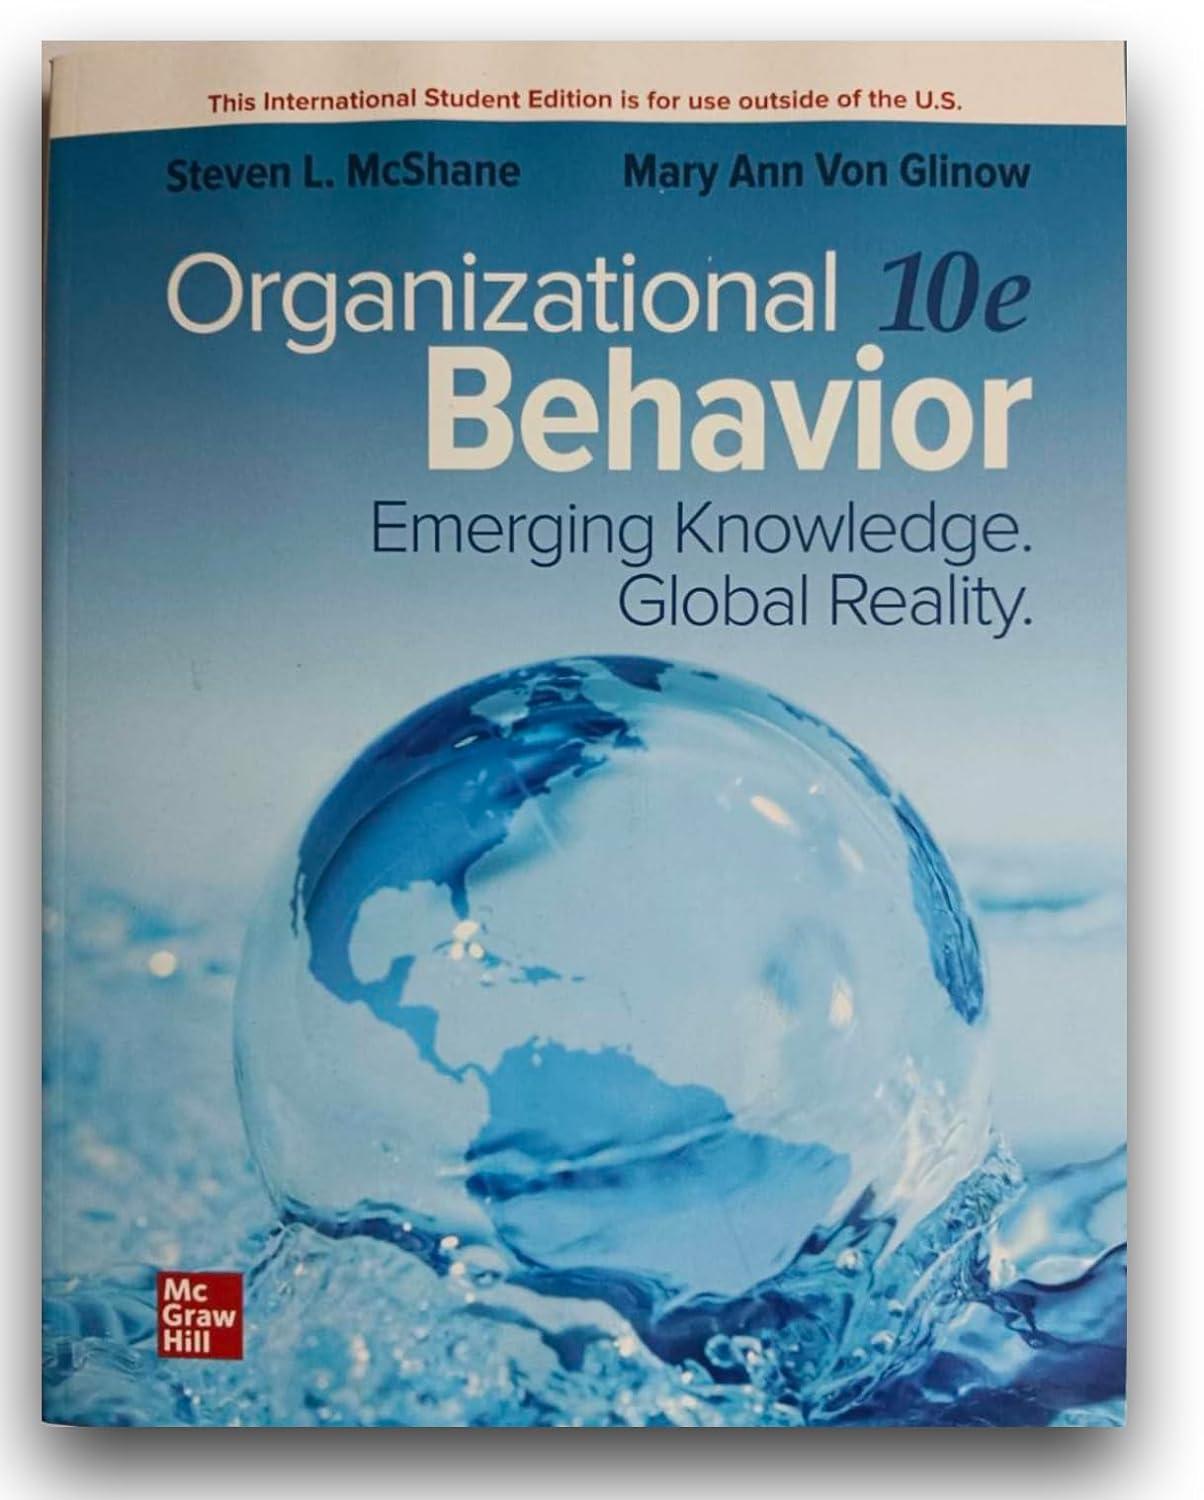 ise organizational behavior emerging knowledge global reality 10th edition mary ann von glinow steven mcshane